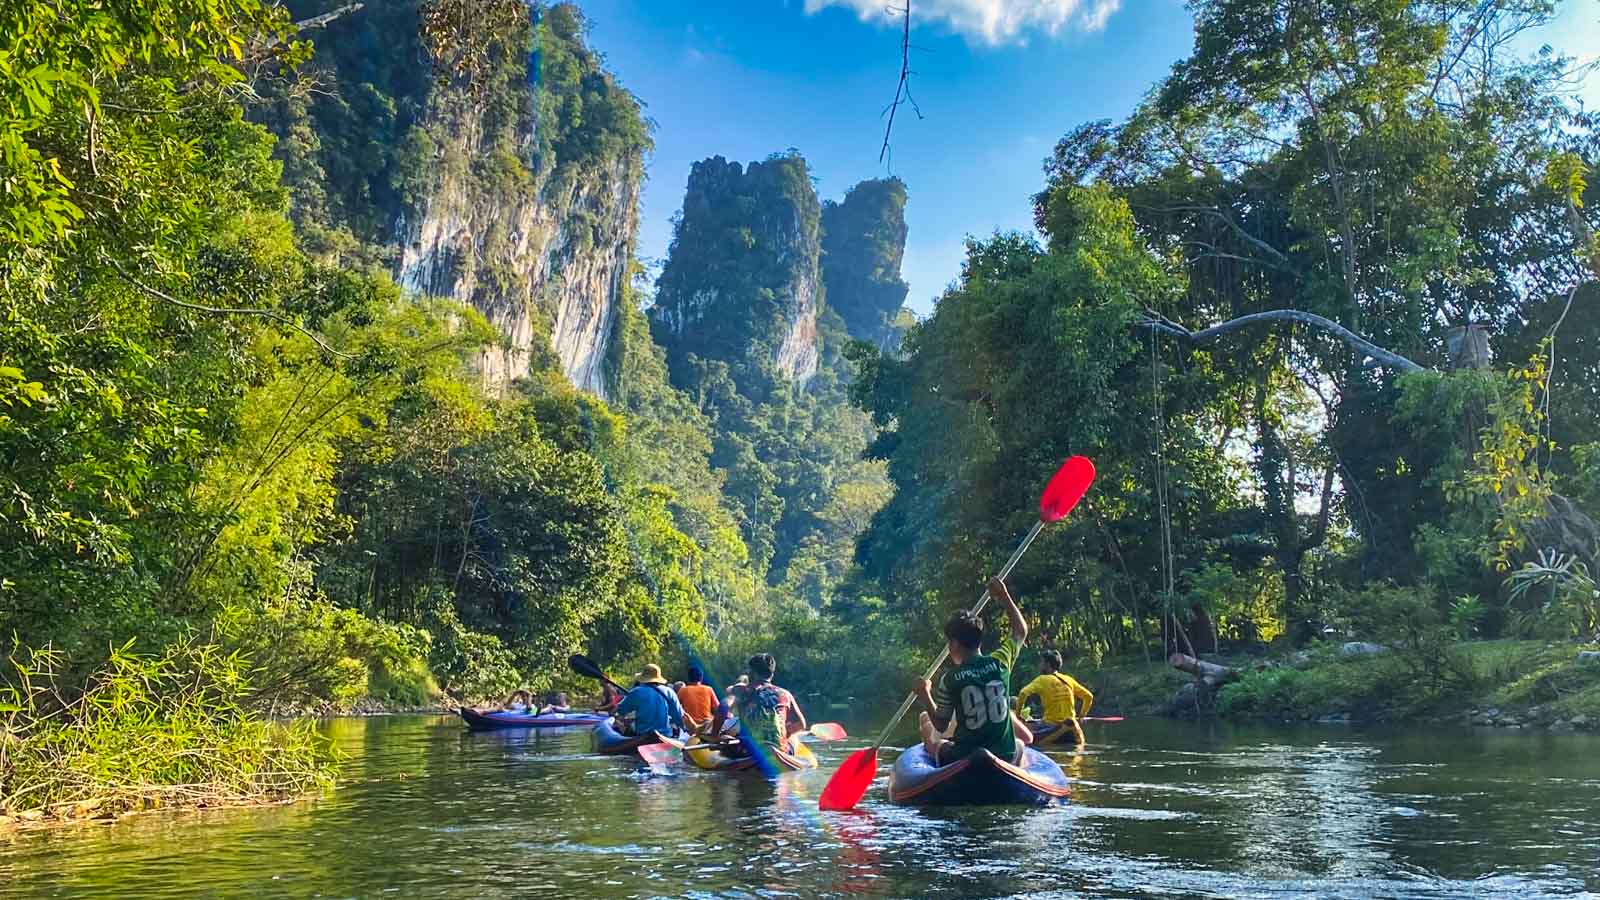 Canoe tour on Thai waterway